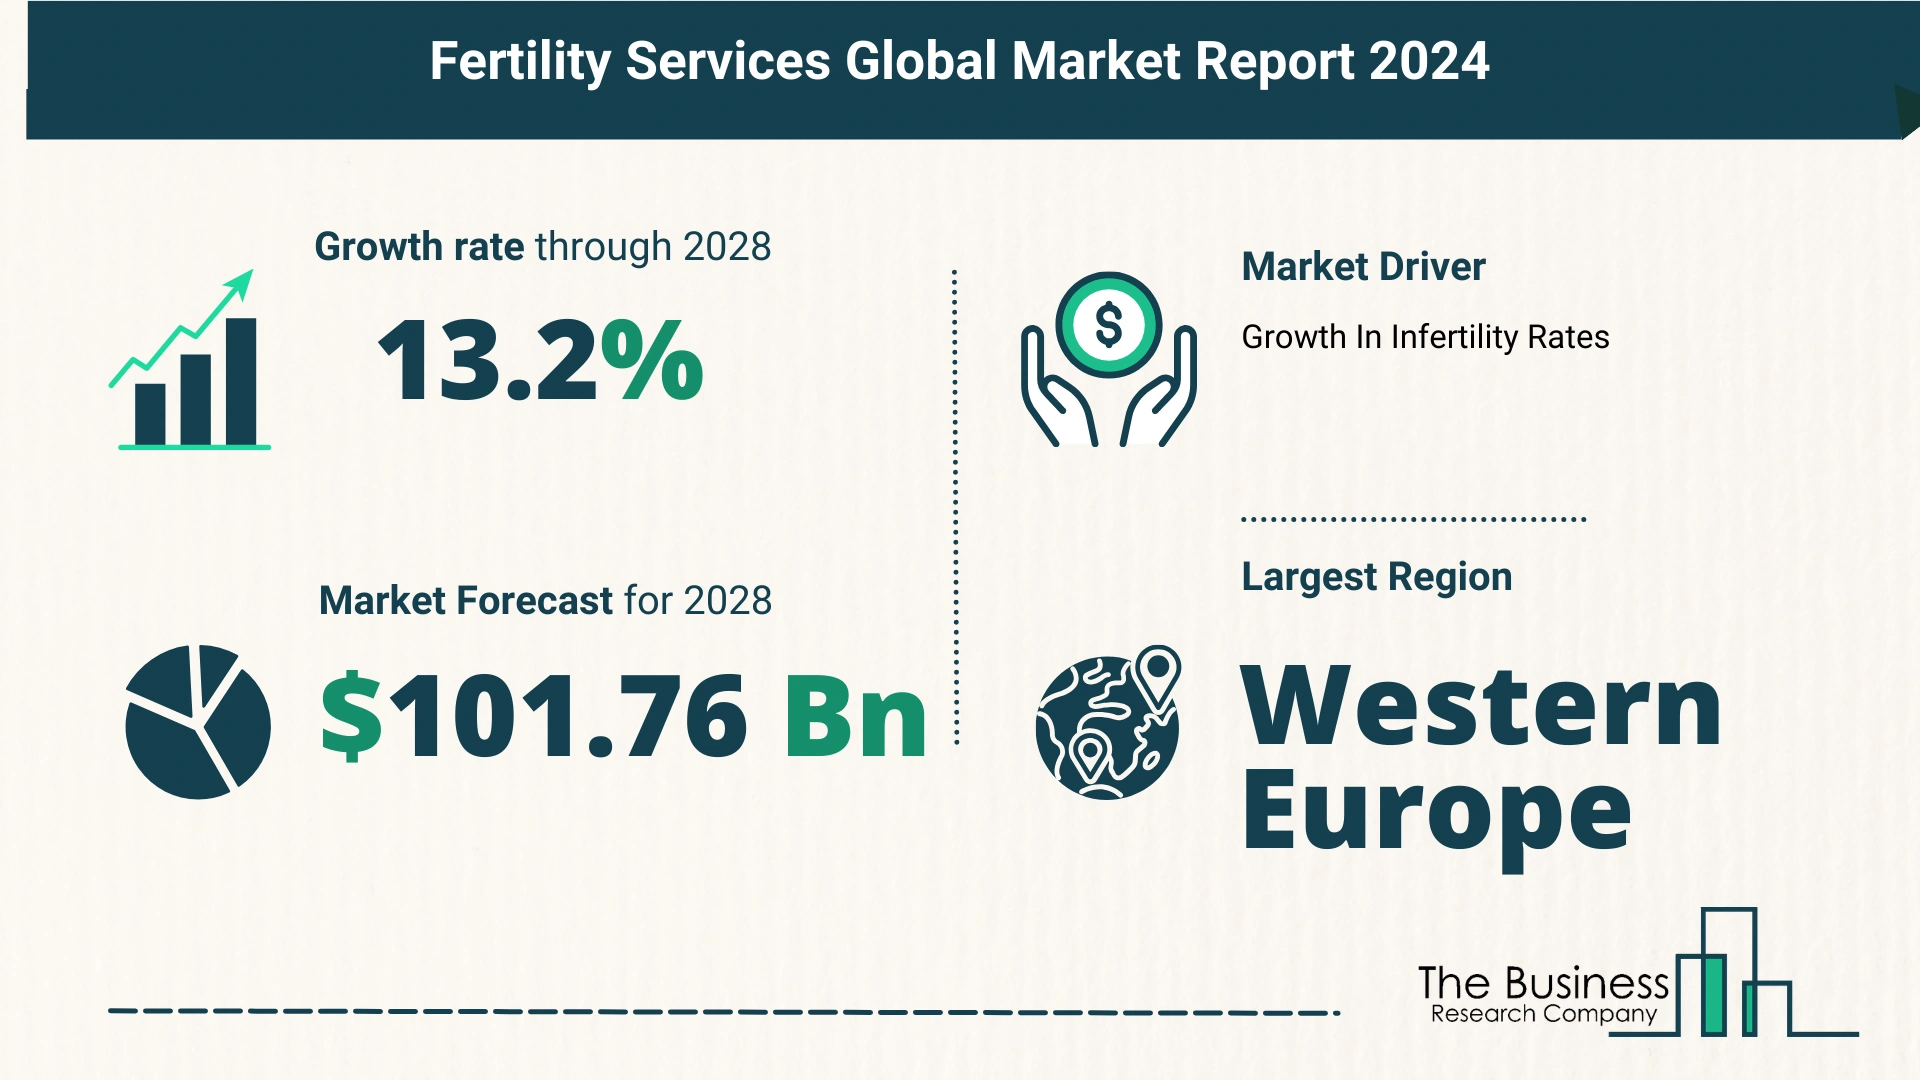 Global Fertility Services Market Trends